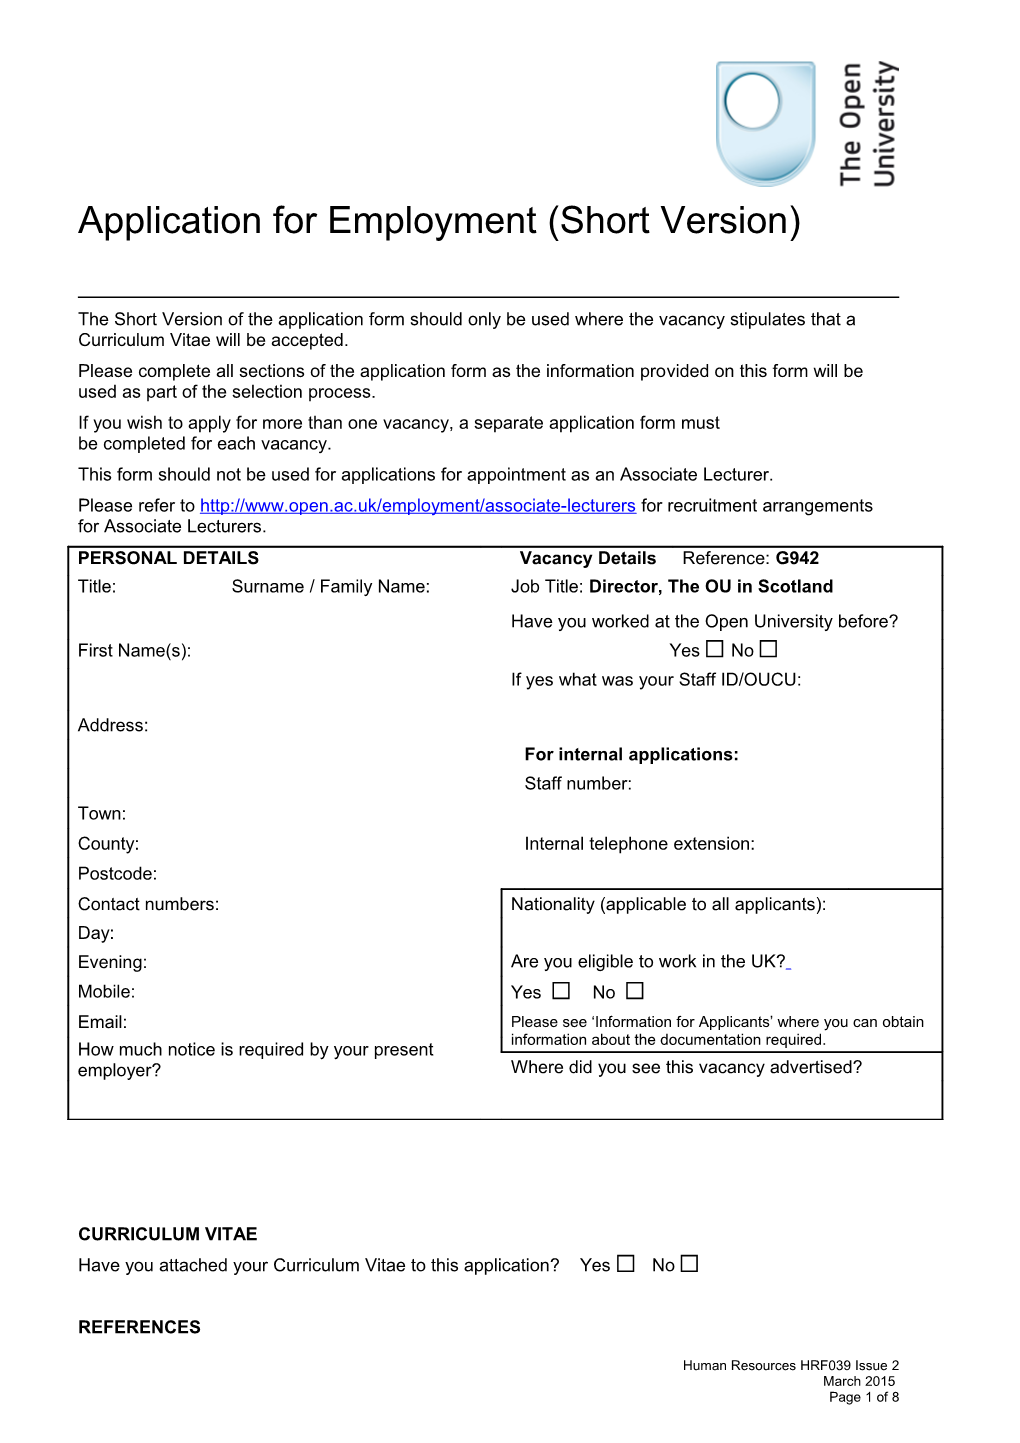 Application for Employment Form Short Version HRF039